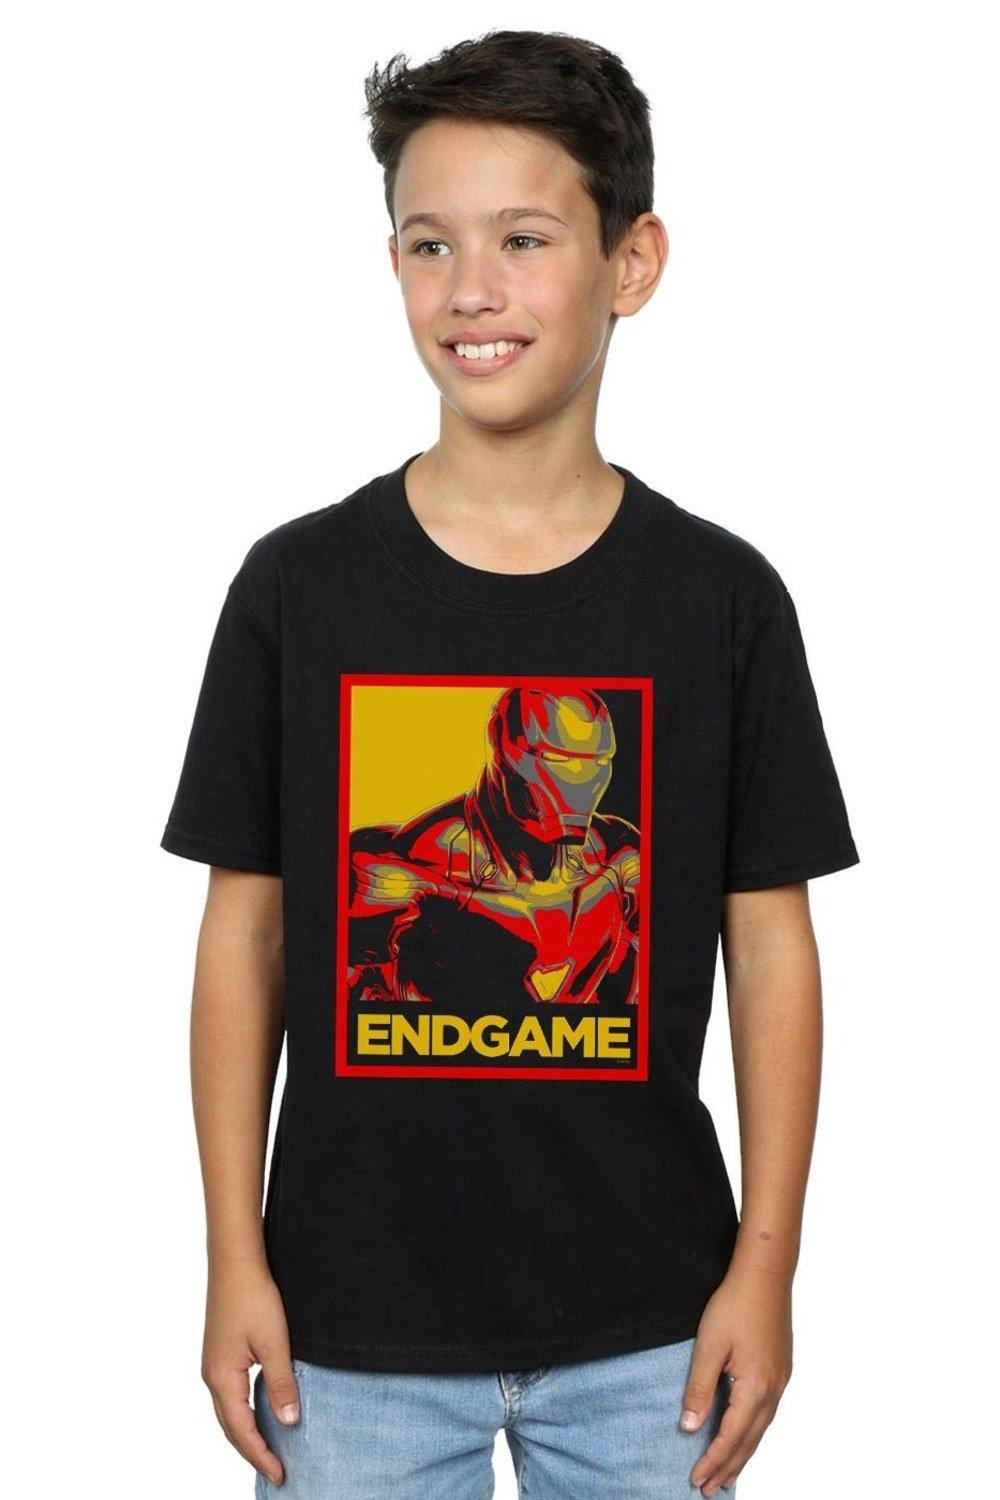 Avengers Endgame Iron Man Poster T-Shirt